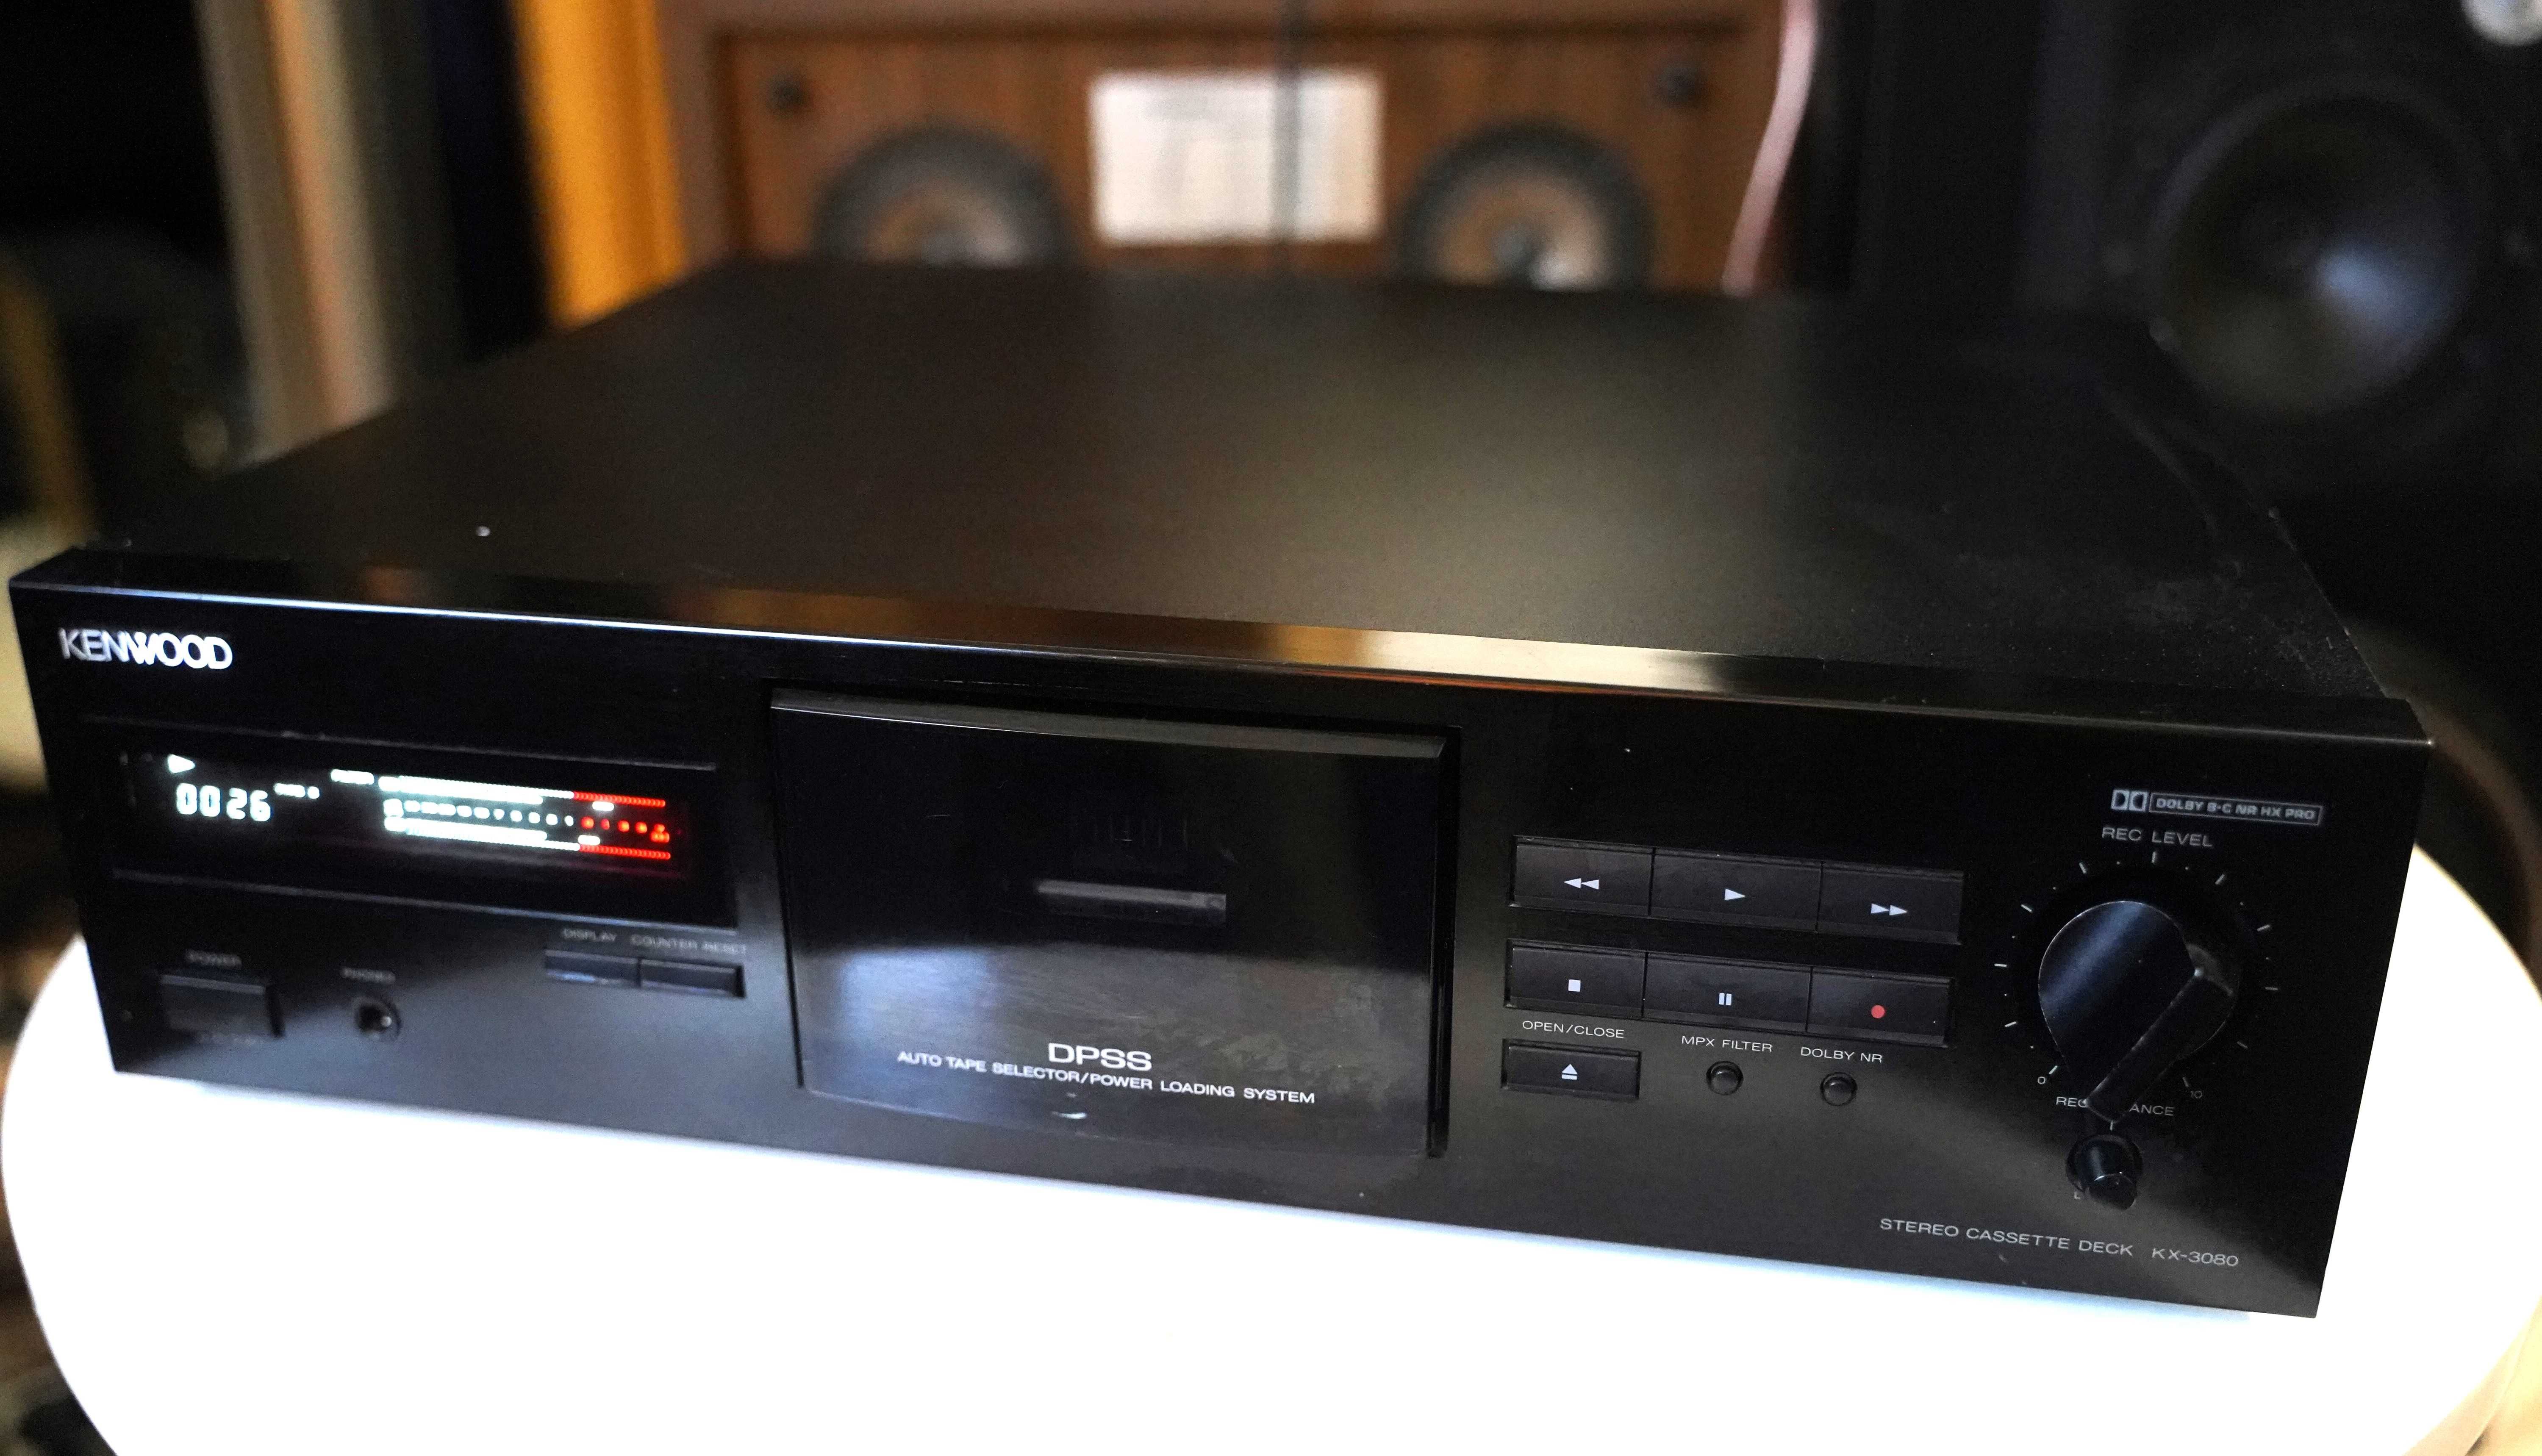 Magnetofon stereo deck KENWOOD KX 3080-piękny model